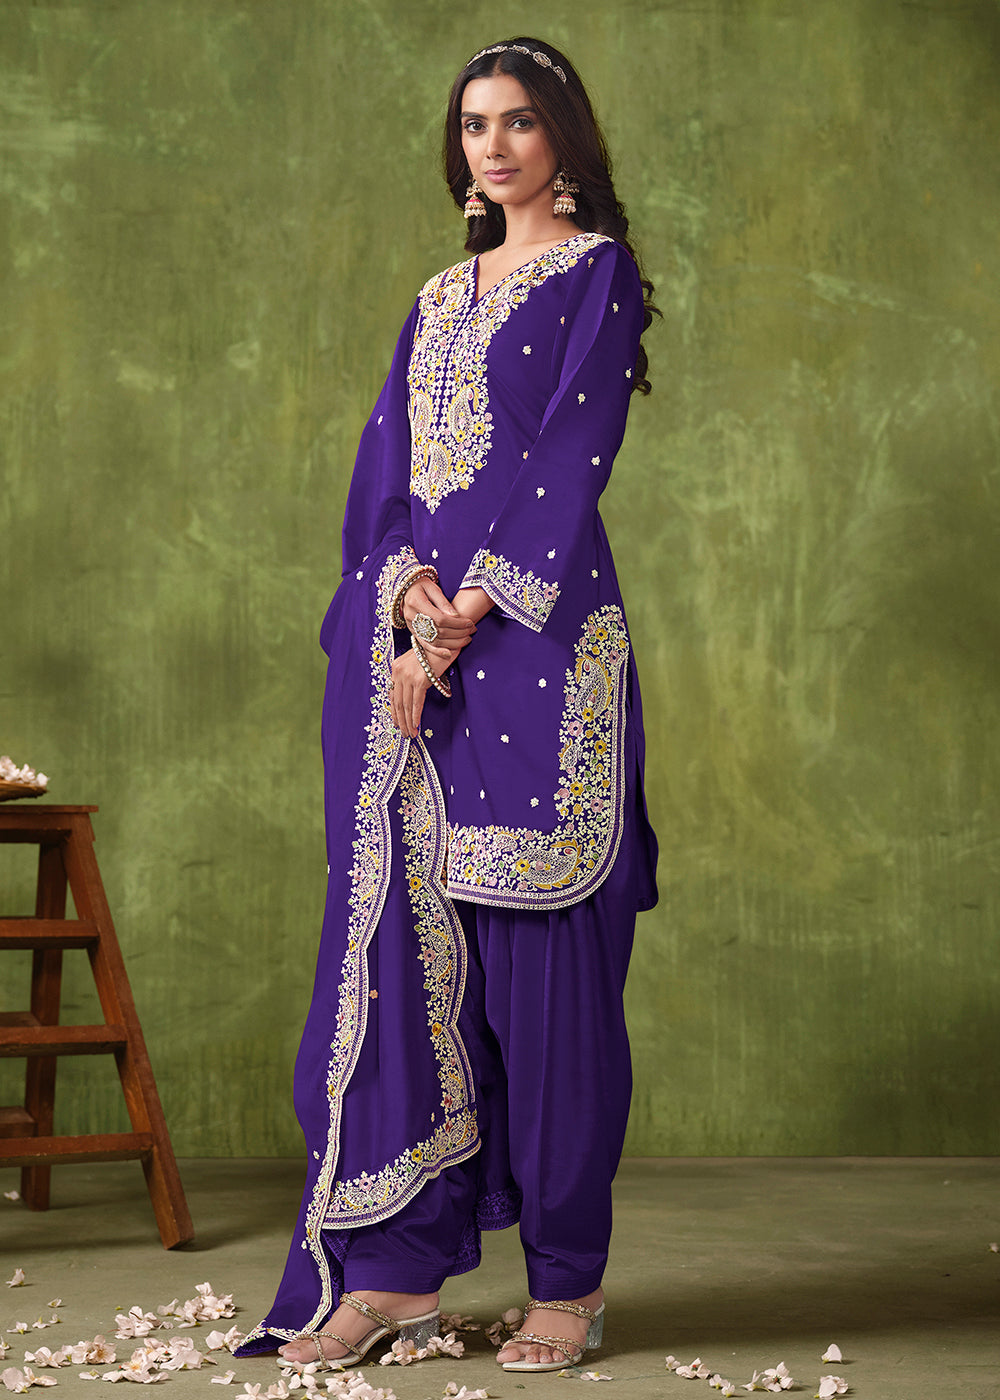 Buy Now Patiala Style Violet Chanderi Silk Punjabi Salwar Suit Online in USA, UK, Canada, Germany, Australia & Worldwide at Empress Clothing. 